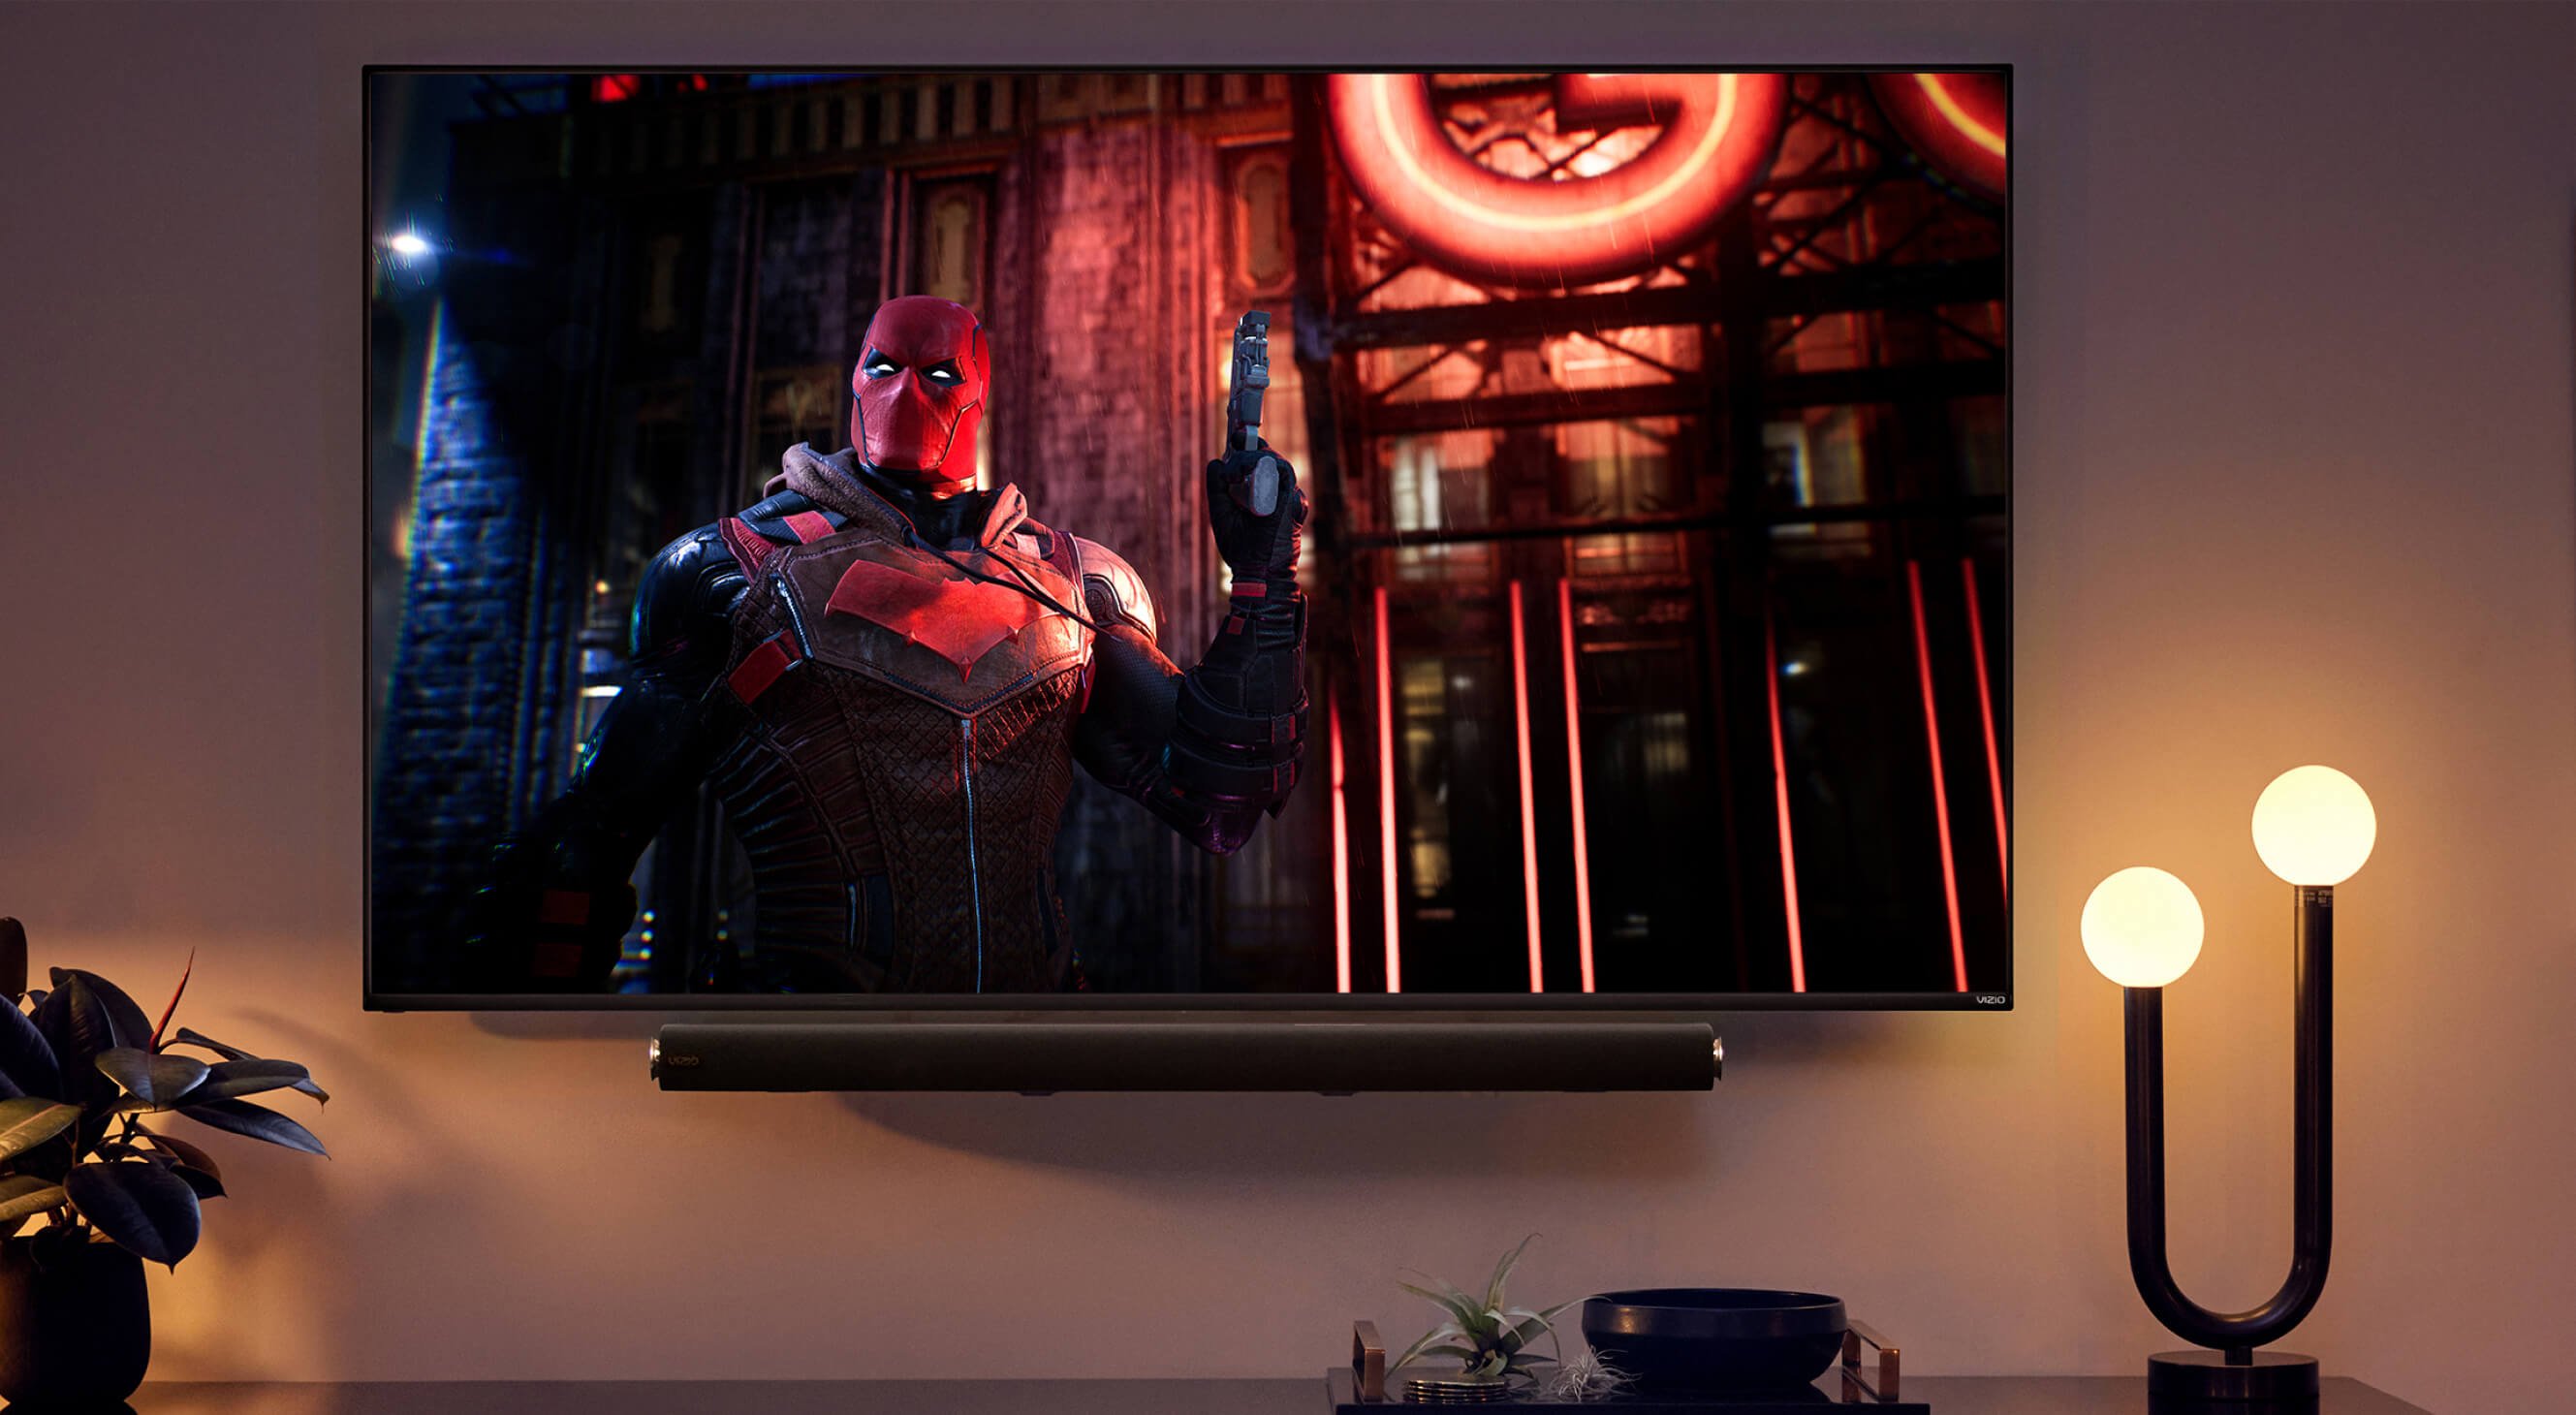 Best 4k TVs for Gaming VIZIO